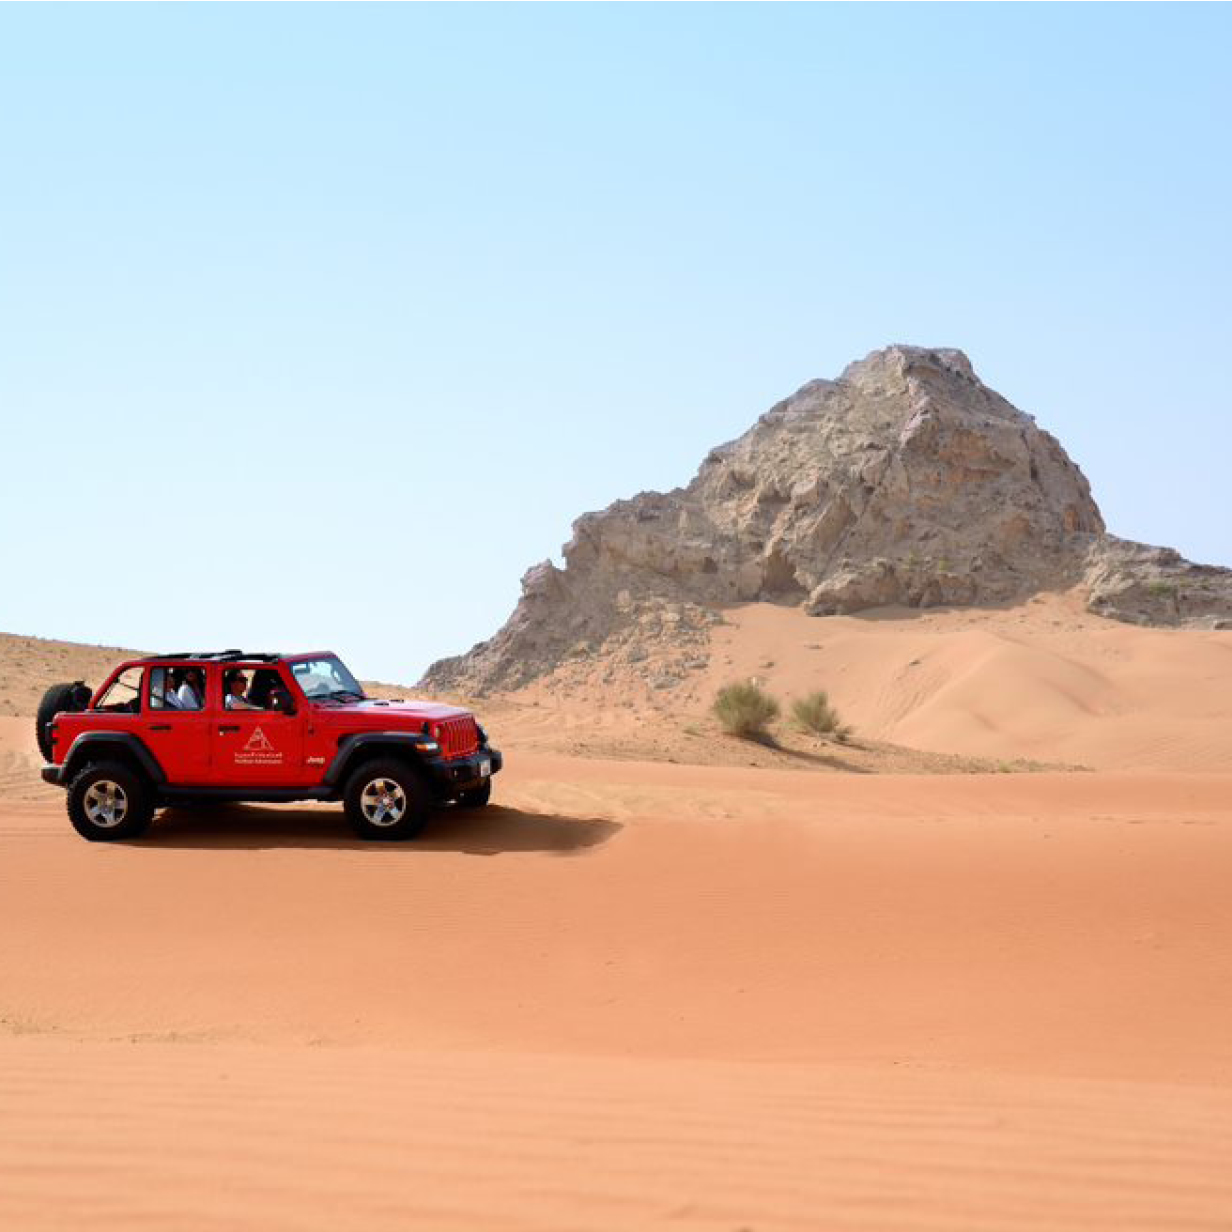 Jeep Desert Safari to Ras al Khaimah & Fujairah